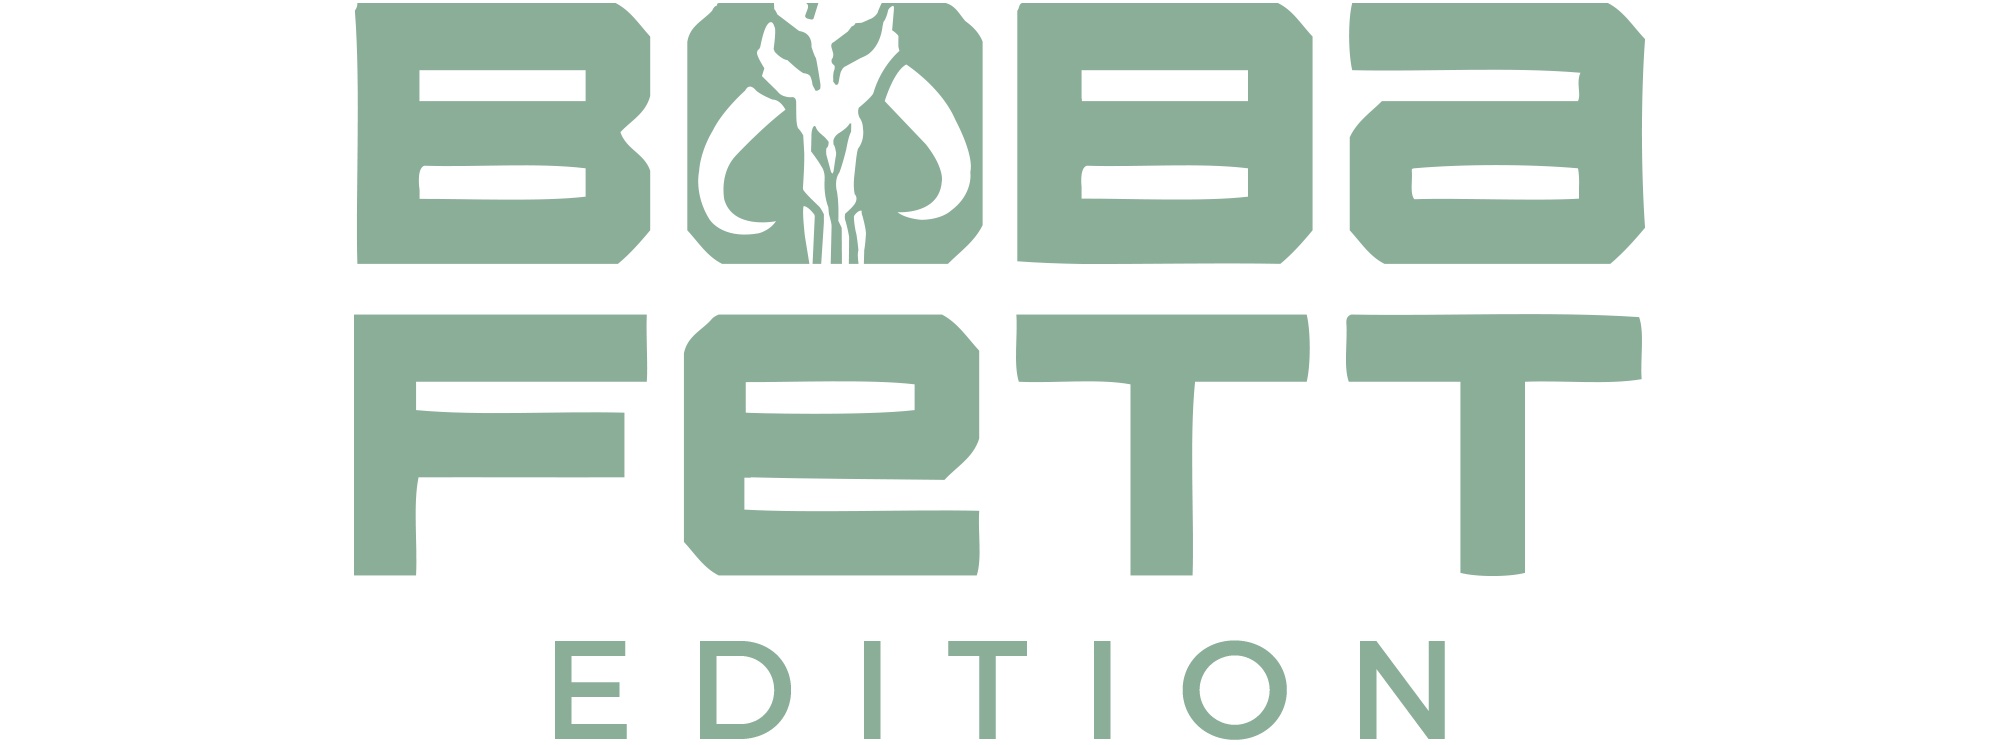 noblechairs HERO Boba Fett Edition title logo